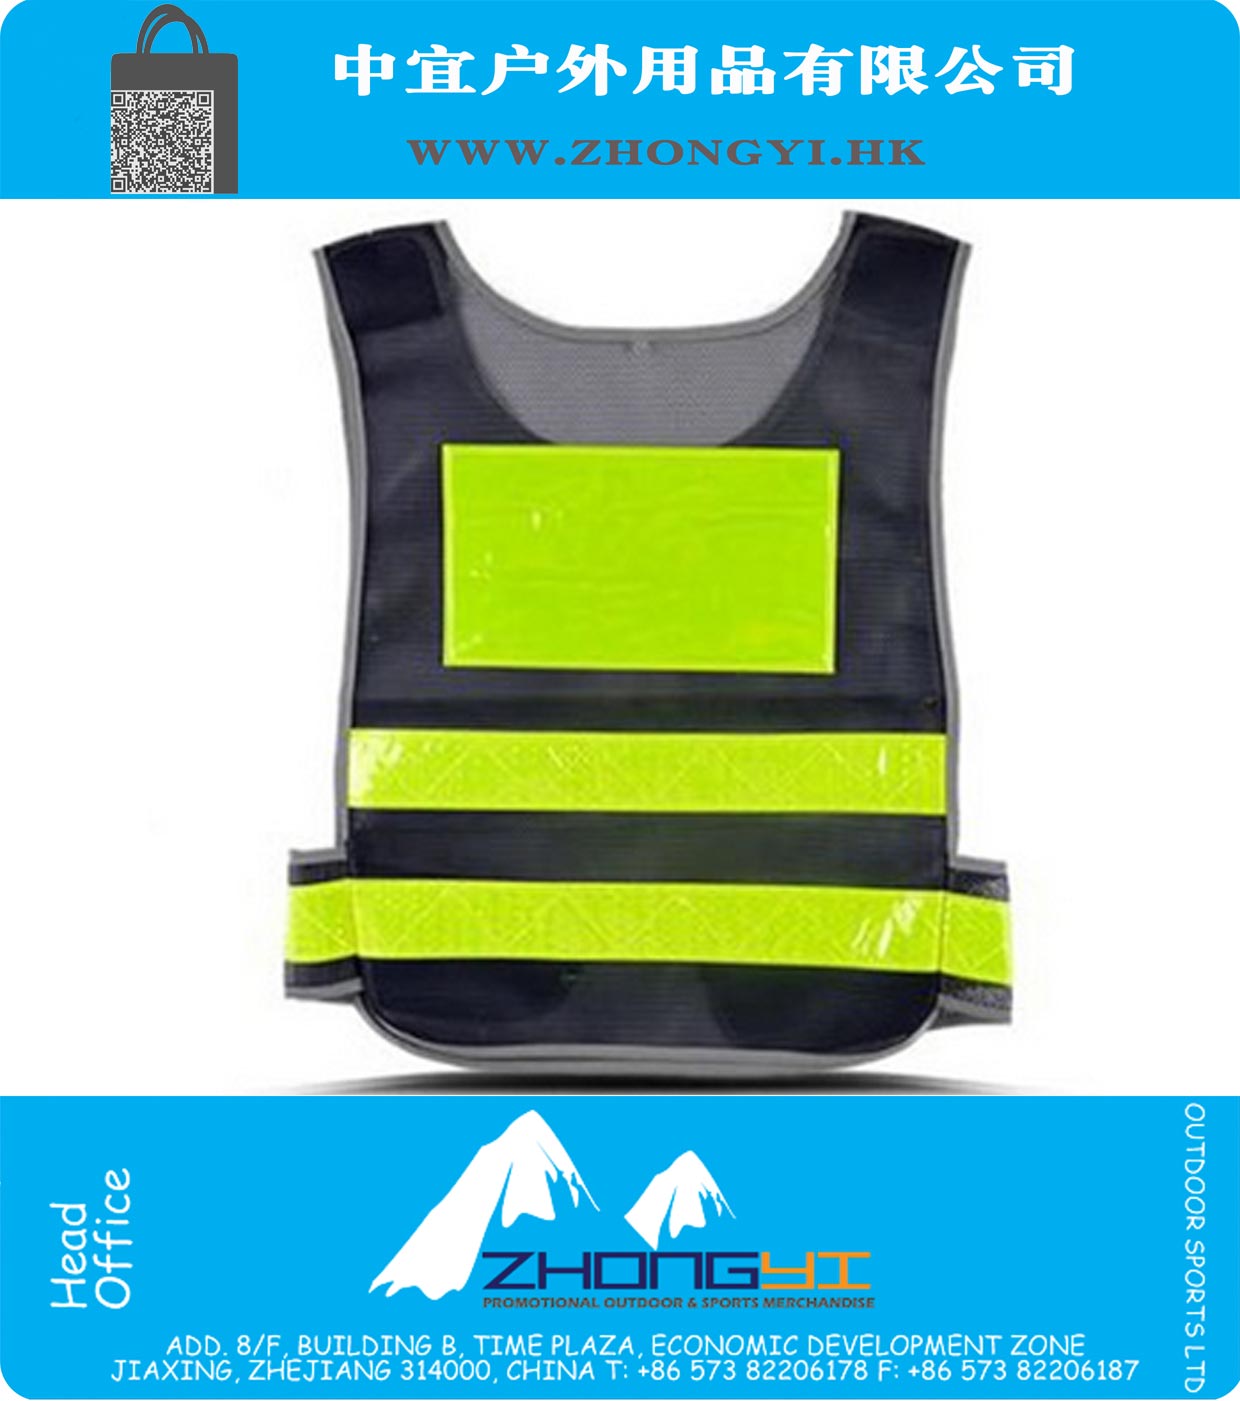 company logo printing vest